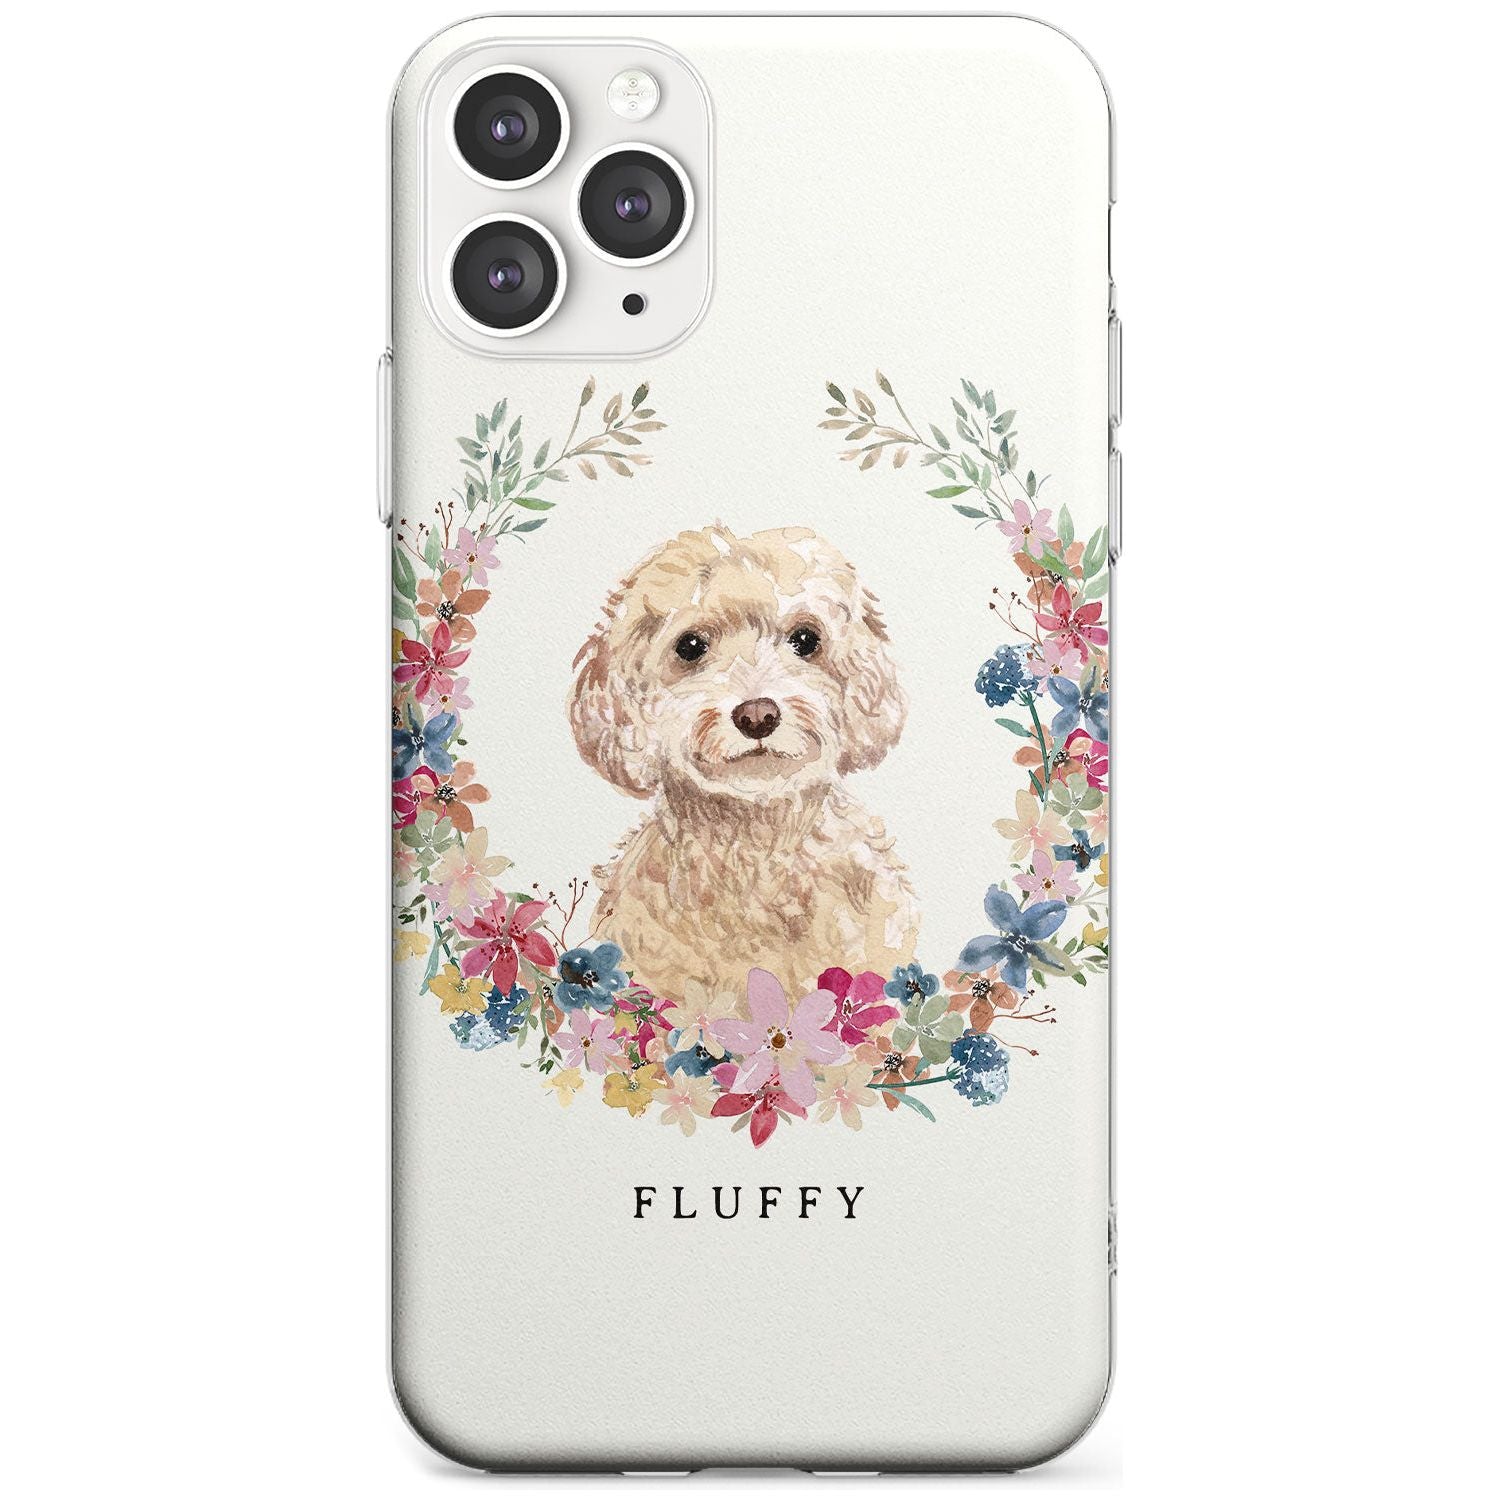 Champagne Cockapoo - Watercolour Dog Portrait Slim TPU Phone Case for iPhone 11 Pro Max